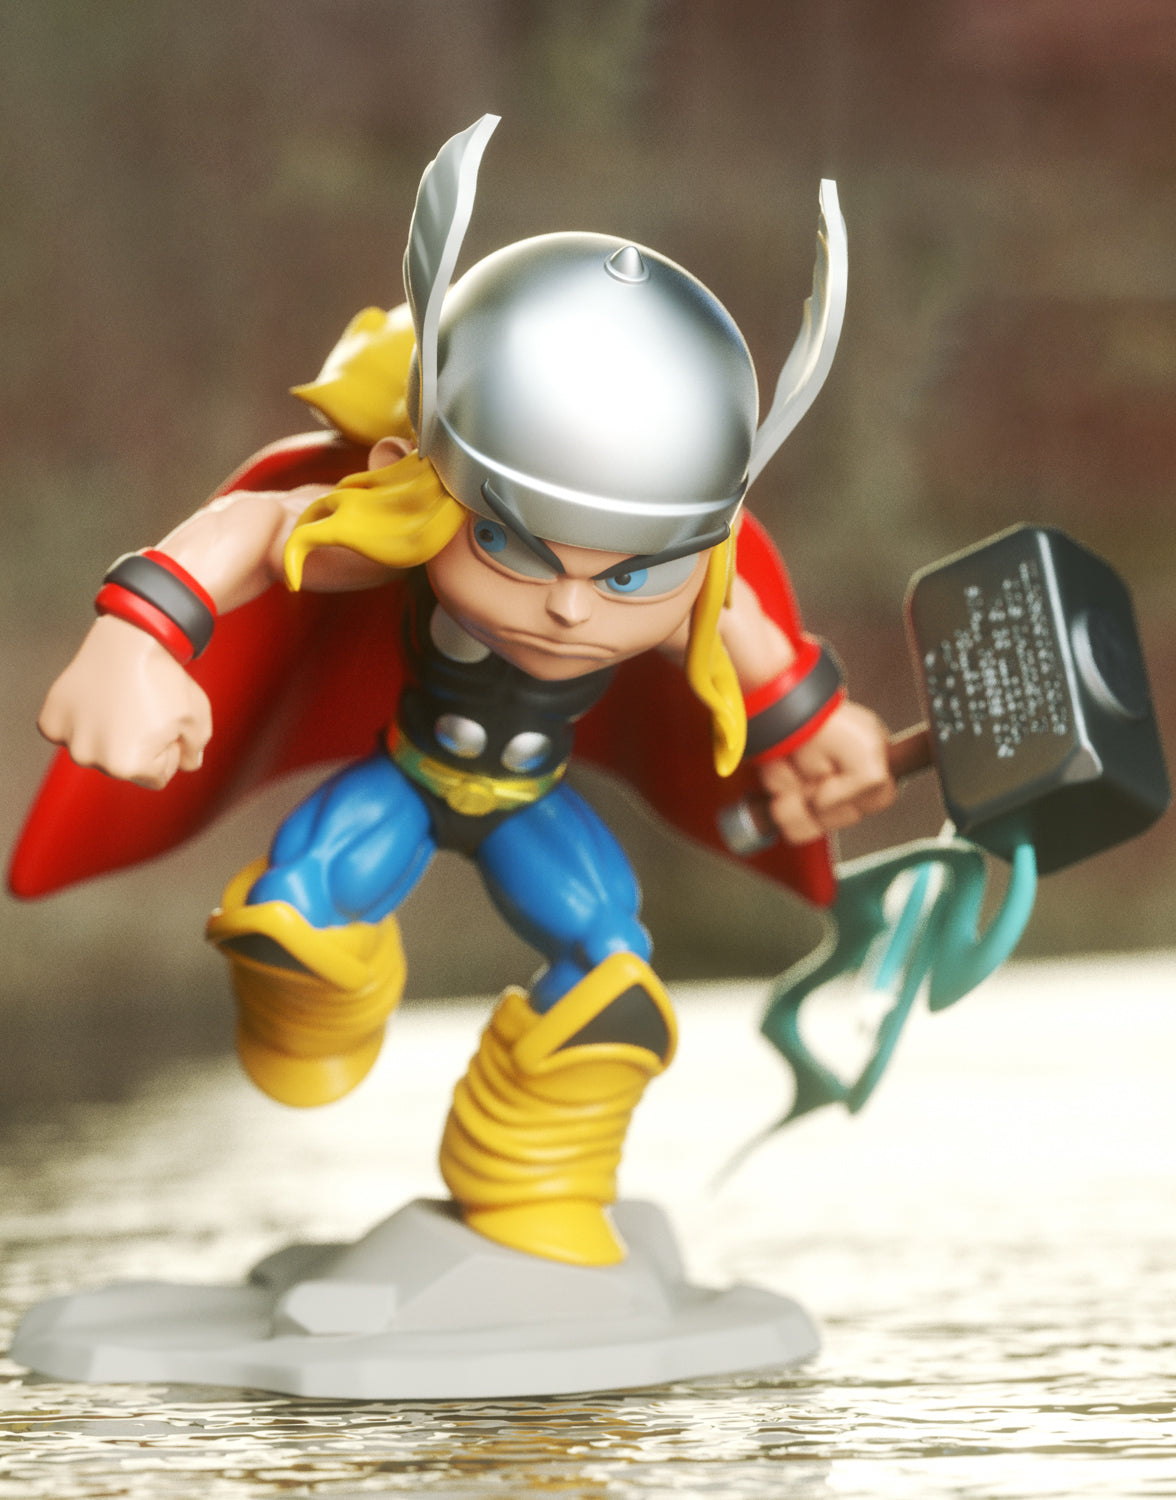 STL Fanart Thanos vs Avengers Chibi Diorama (Includes Standalones)